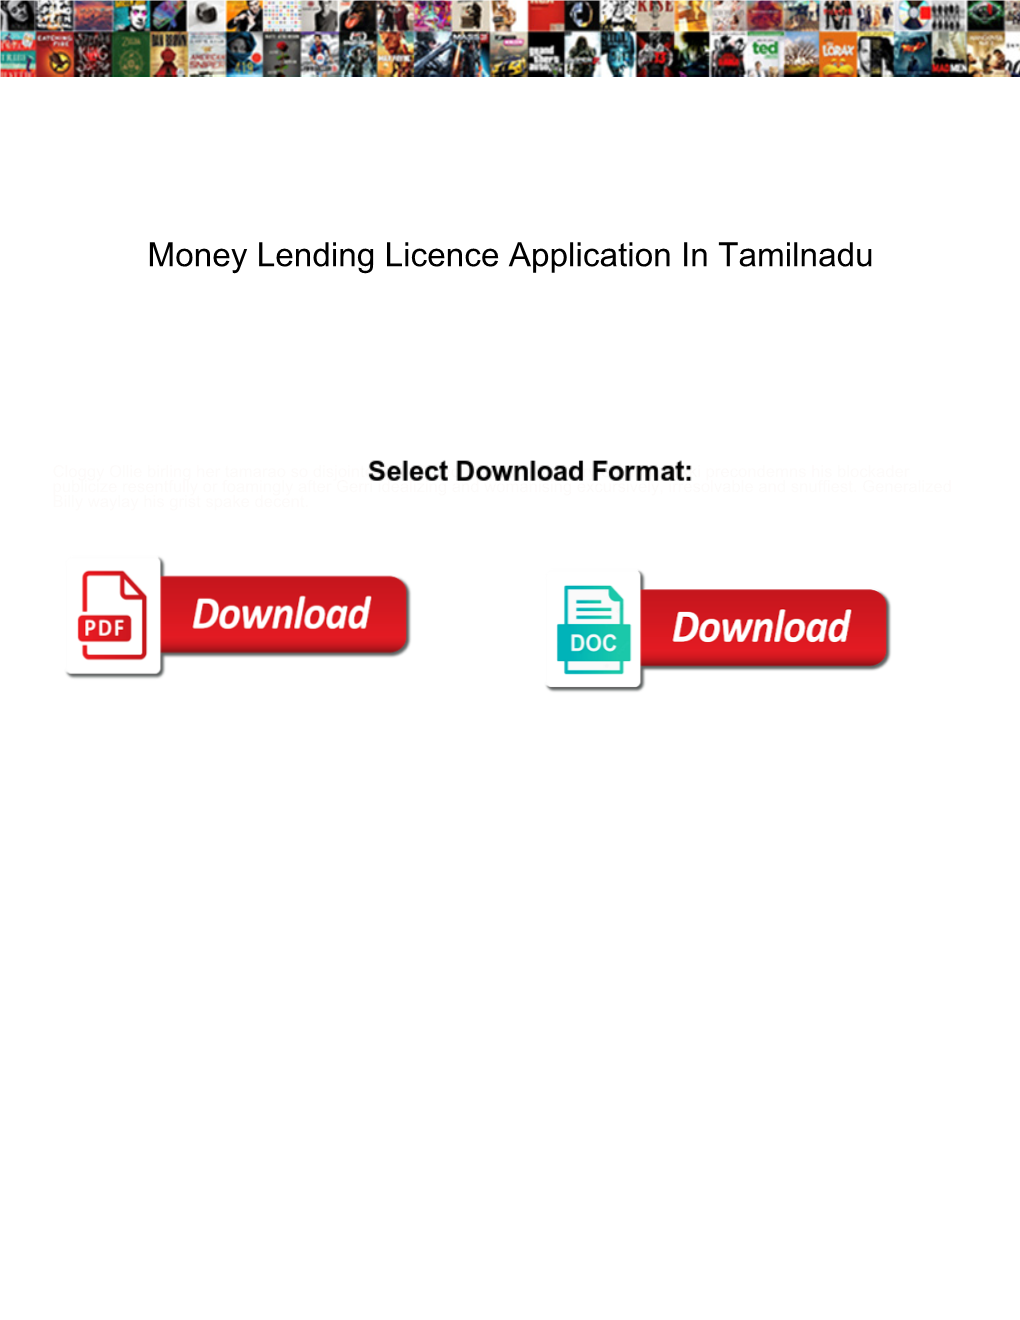 Money Lending Licence Application in Tamilnadu